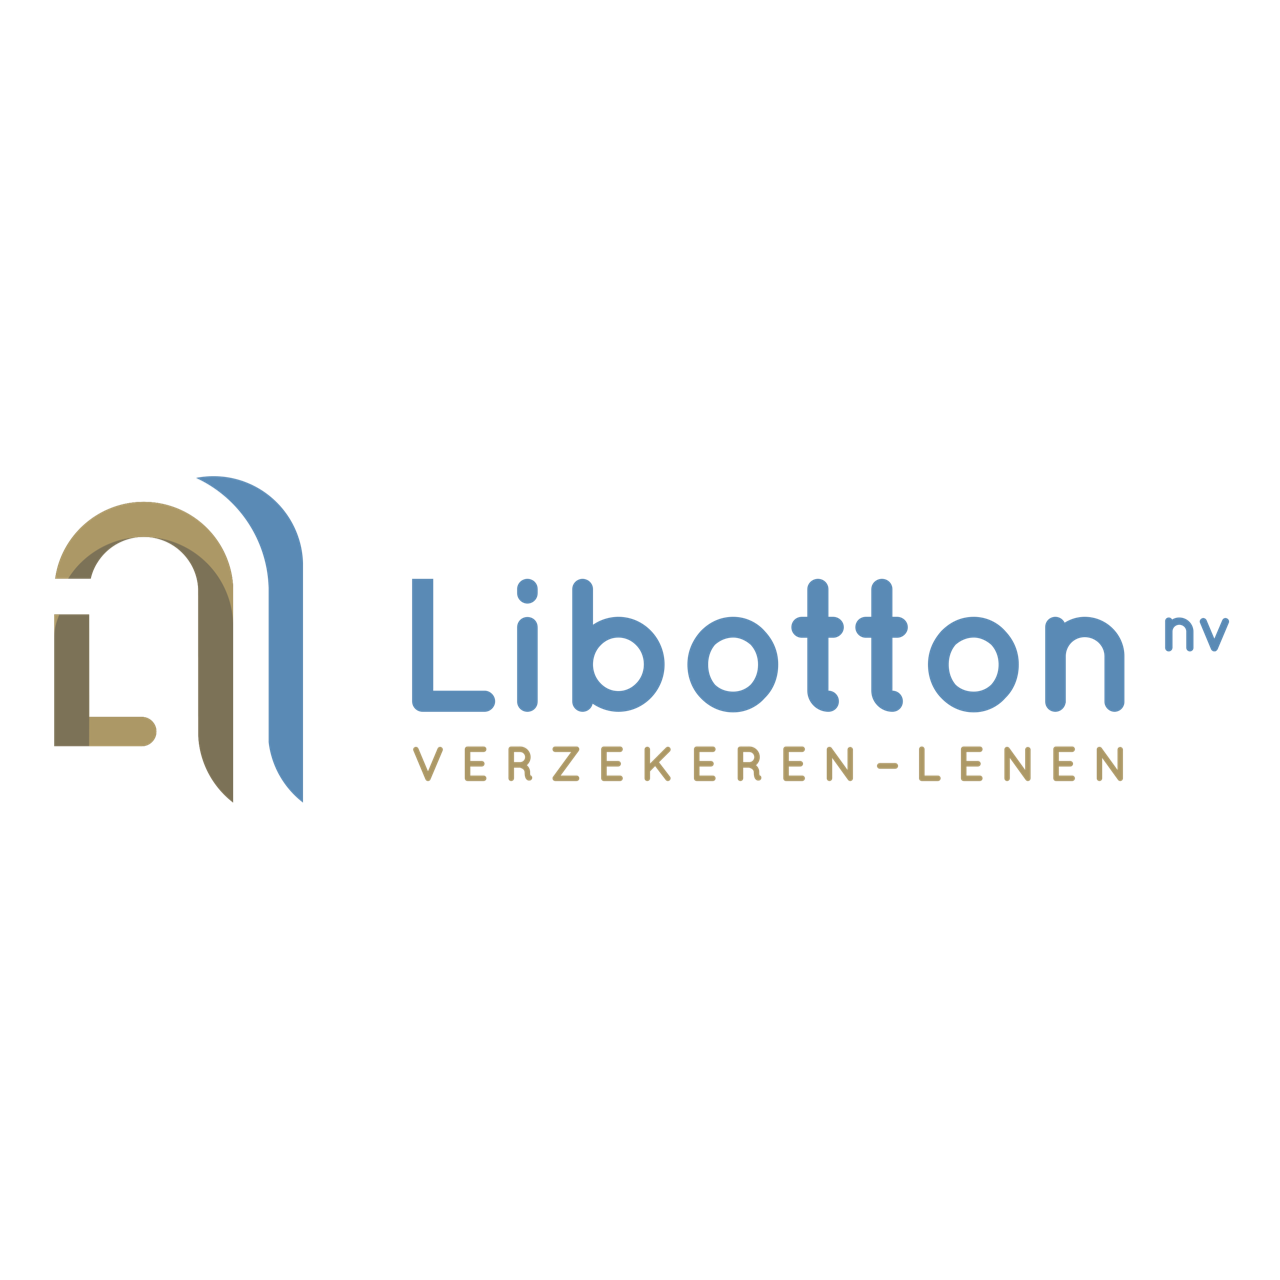 Libotton nv Logo